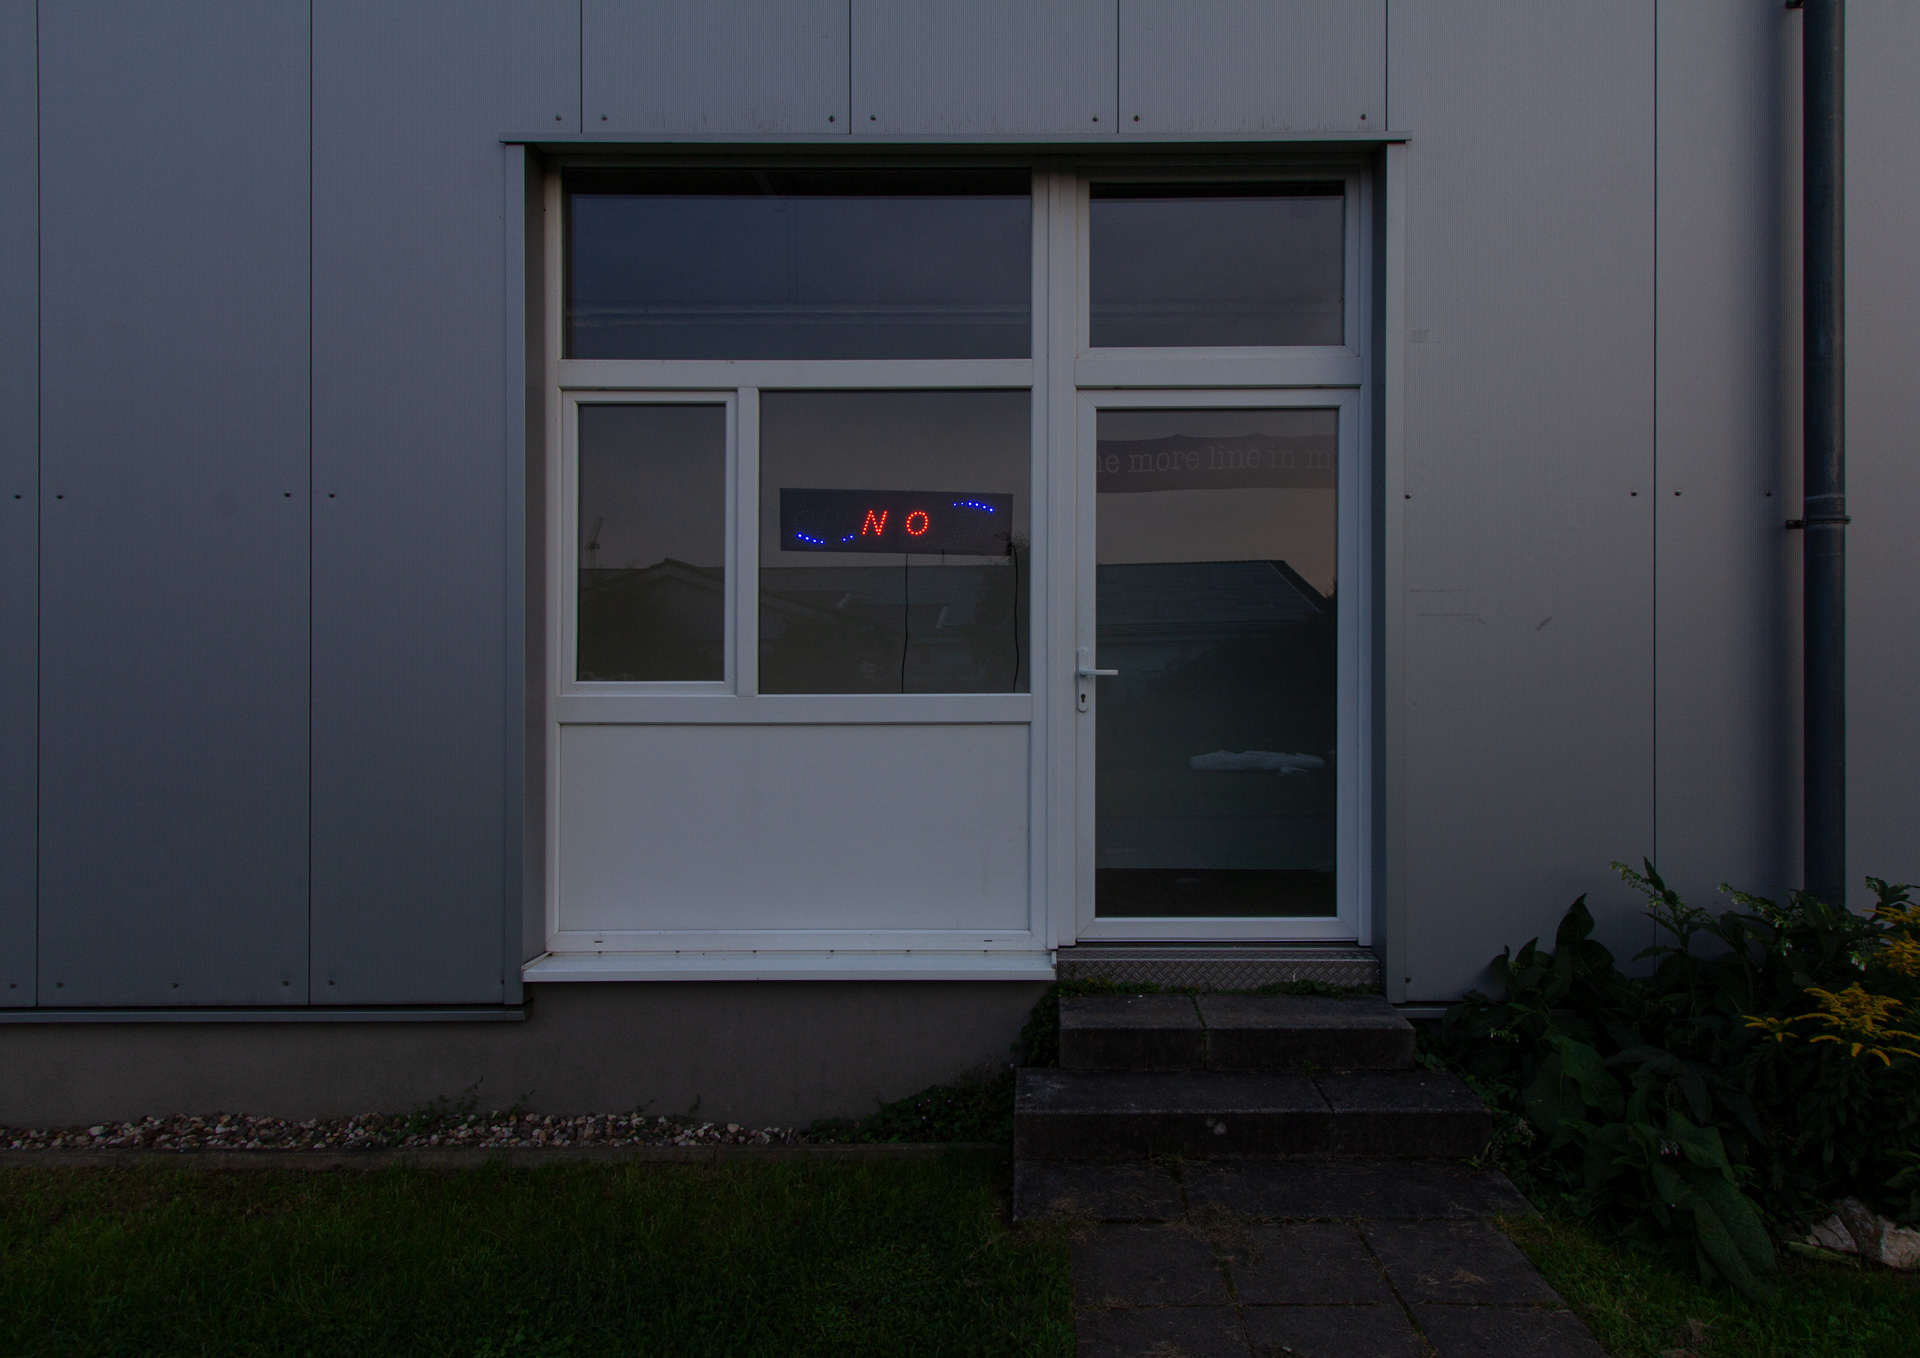 Manuel Boden, NO, 2022, zwei LED “OPEN” Schilder, 96 x 25 x 3 cm